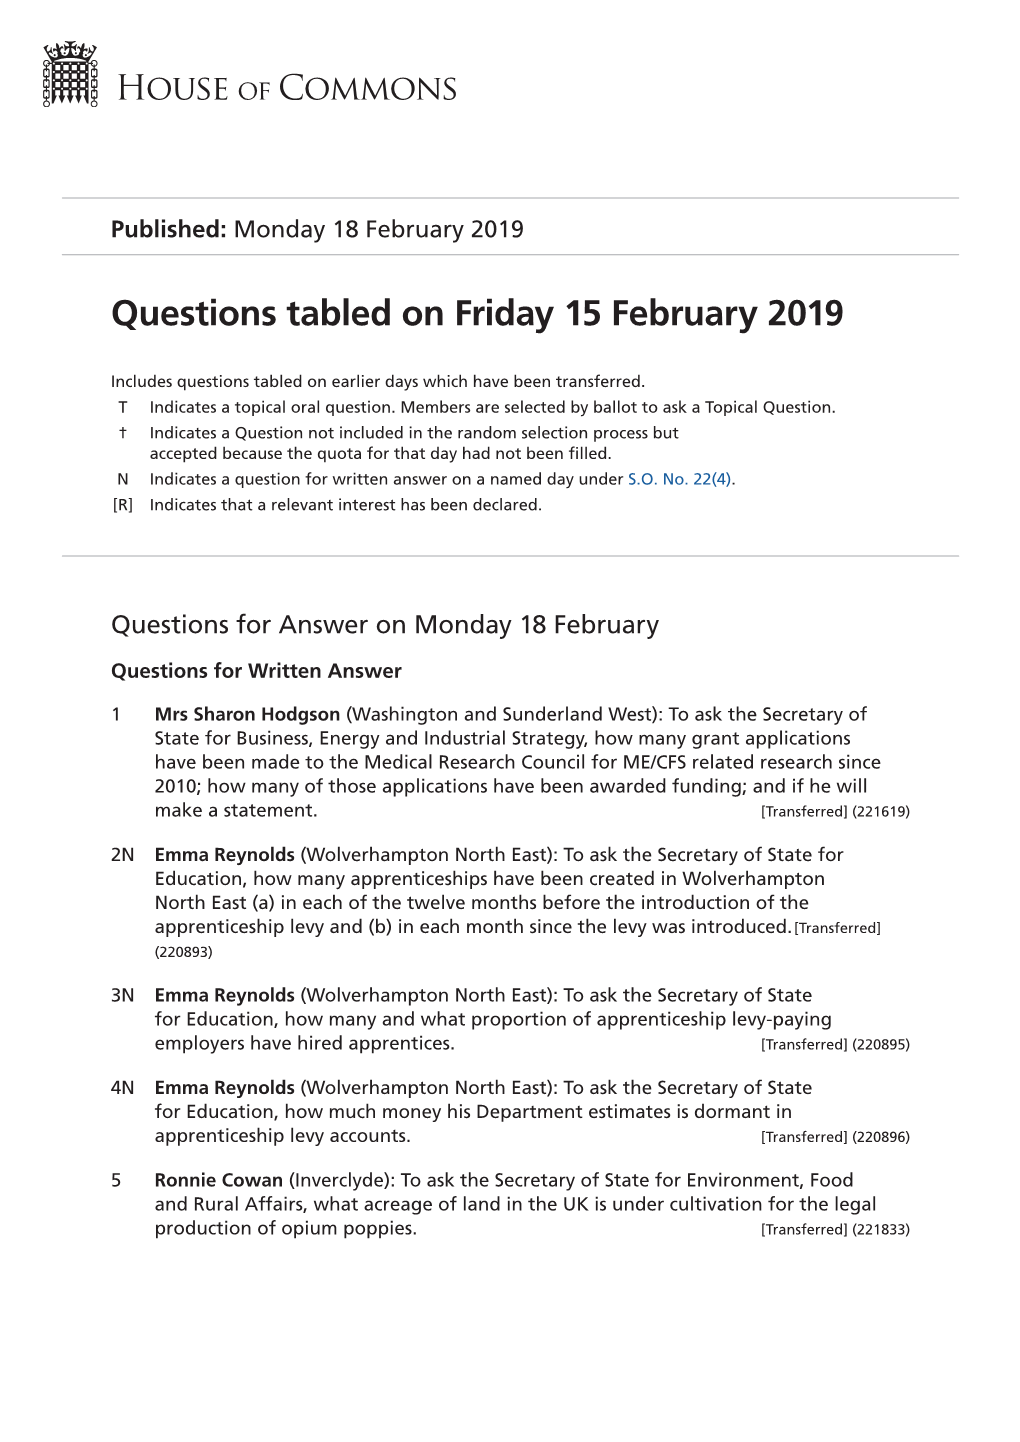 Questions Tabled on Fri 15 Feb 2019